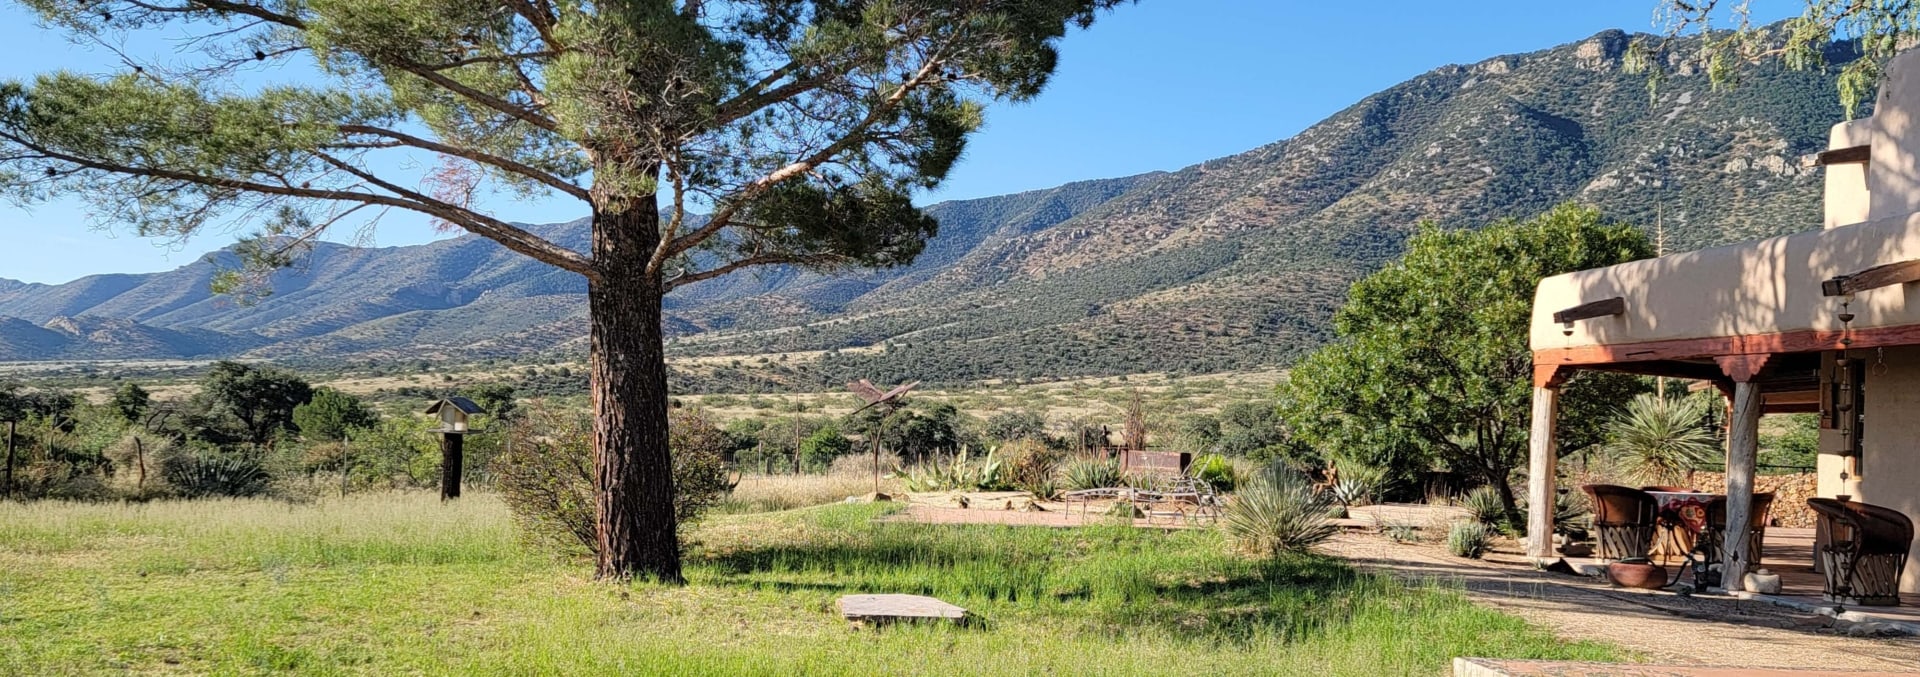 arizona property for sale hacienda de la dragoon mountains